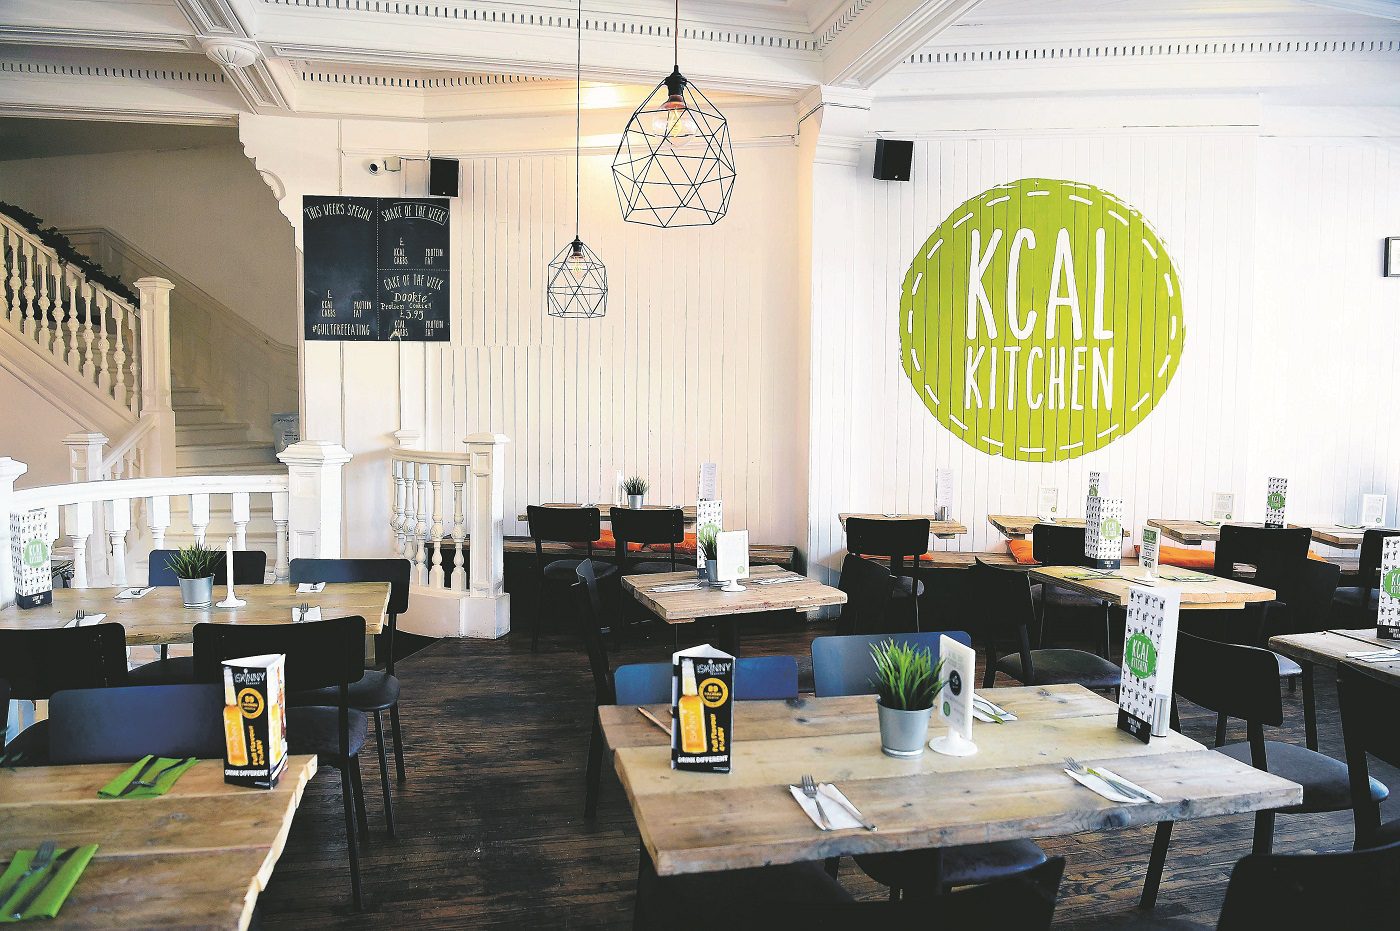 Kcal Kitchen, Edinburgh, restaurant review - Scotsman Food and Drink